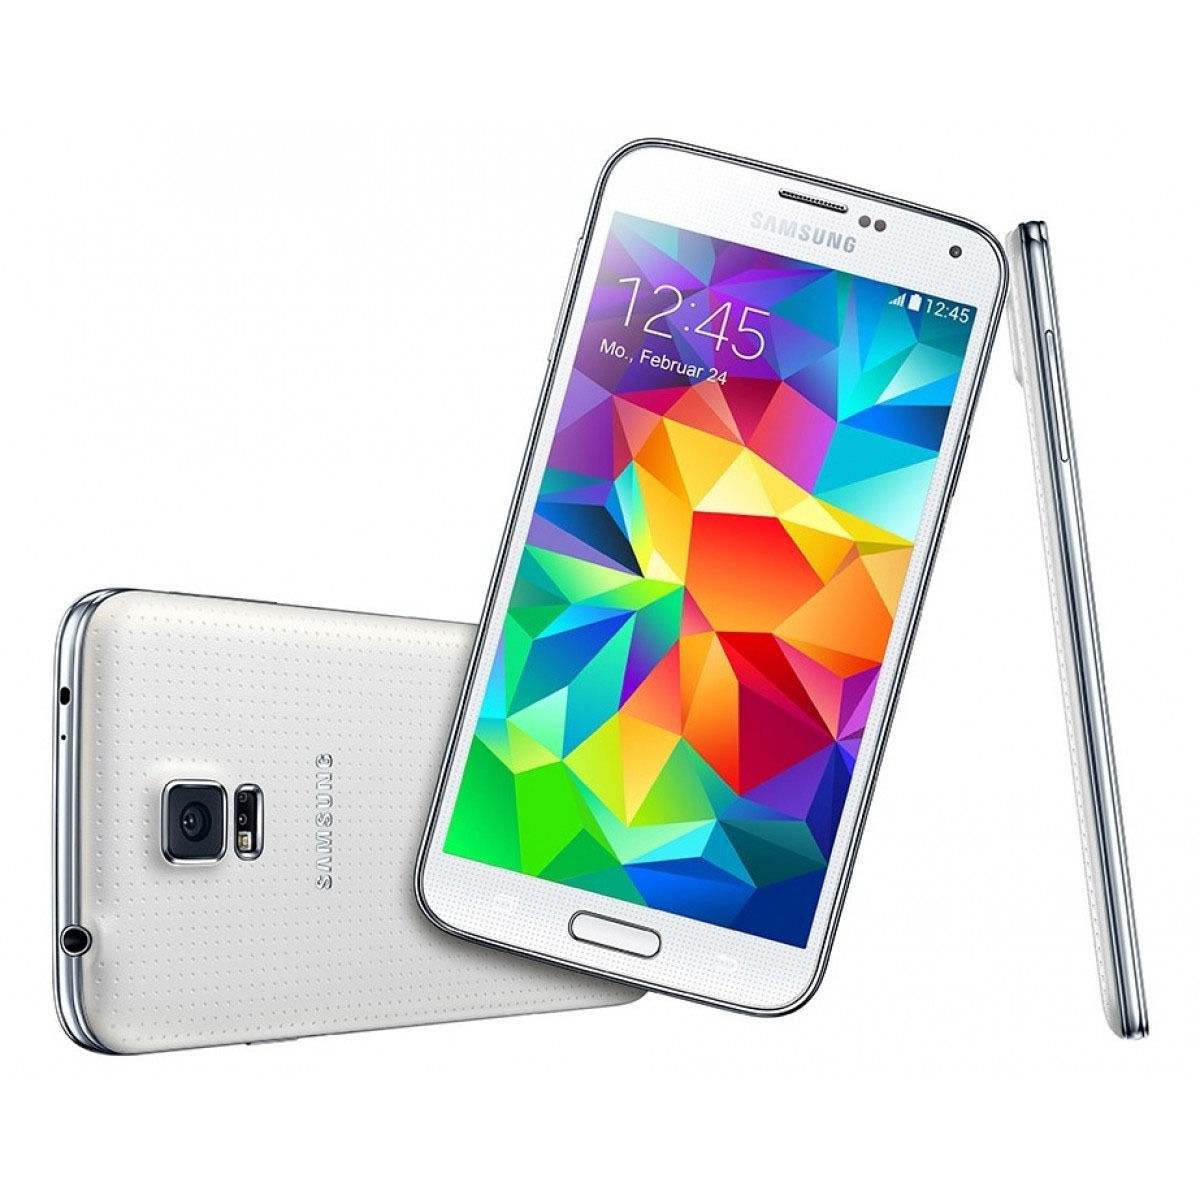 Samsung Galaxy S5 Sm G900a 16gb White Unlocked Gsm Smartphone Atandt